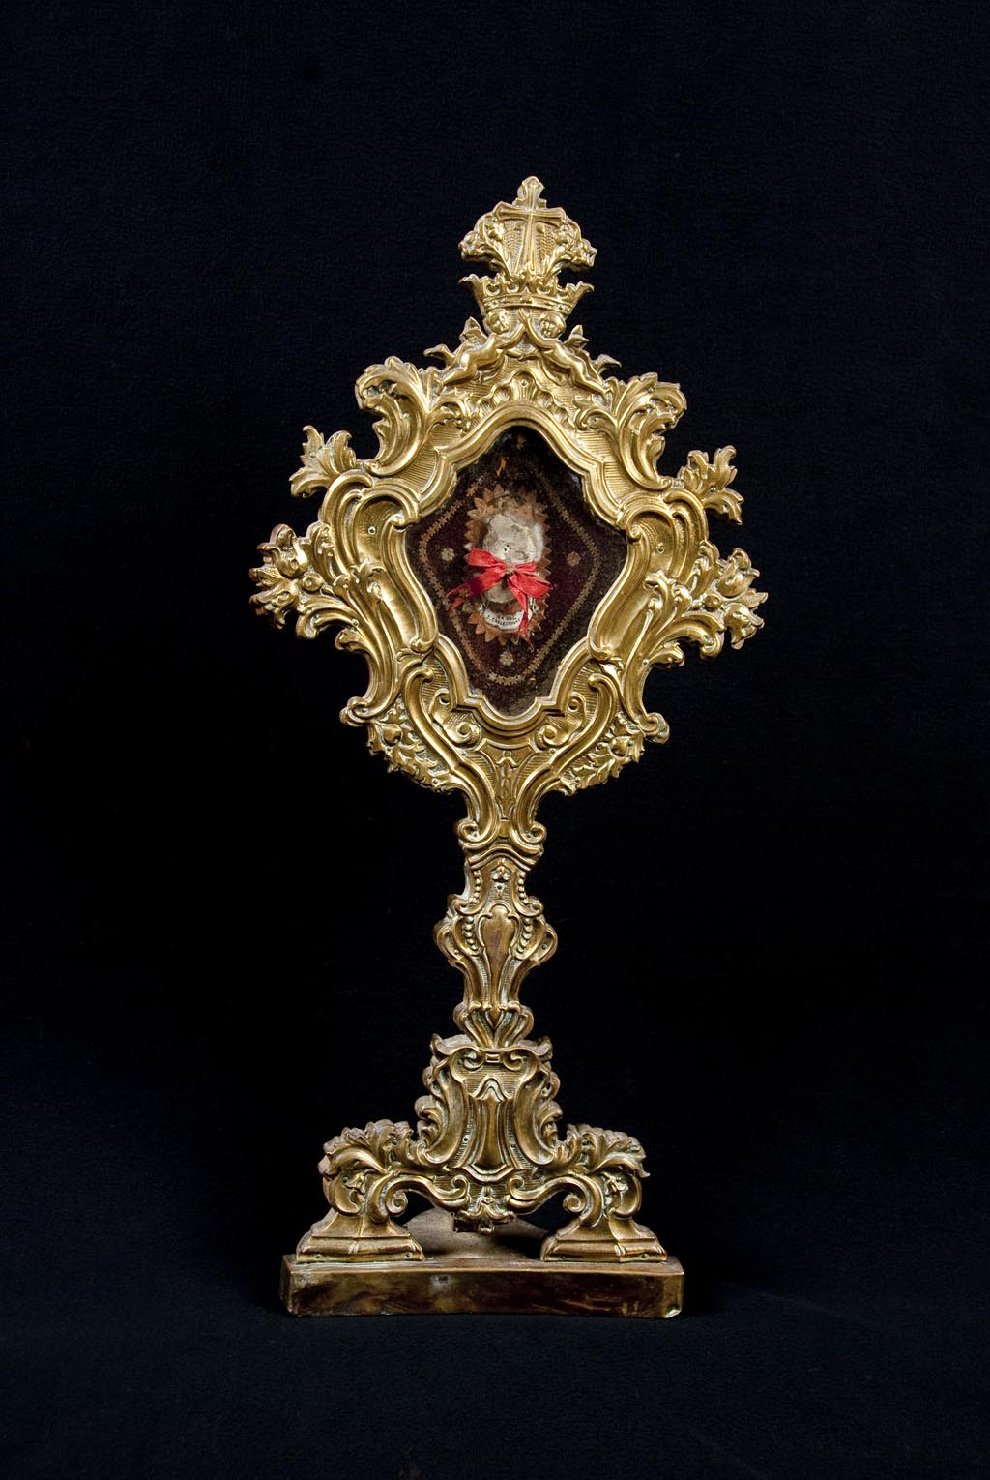 angioletti reggicorona, motivi decorativi floreali, croce (reliquiario-ostensorio, serie) - bottega veneta (terzo quarto sec. XVIII)